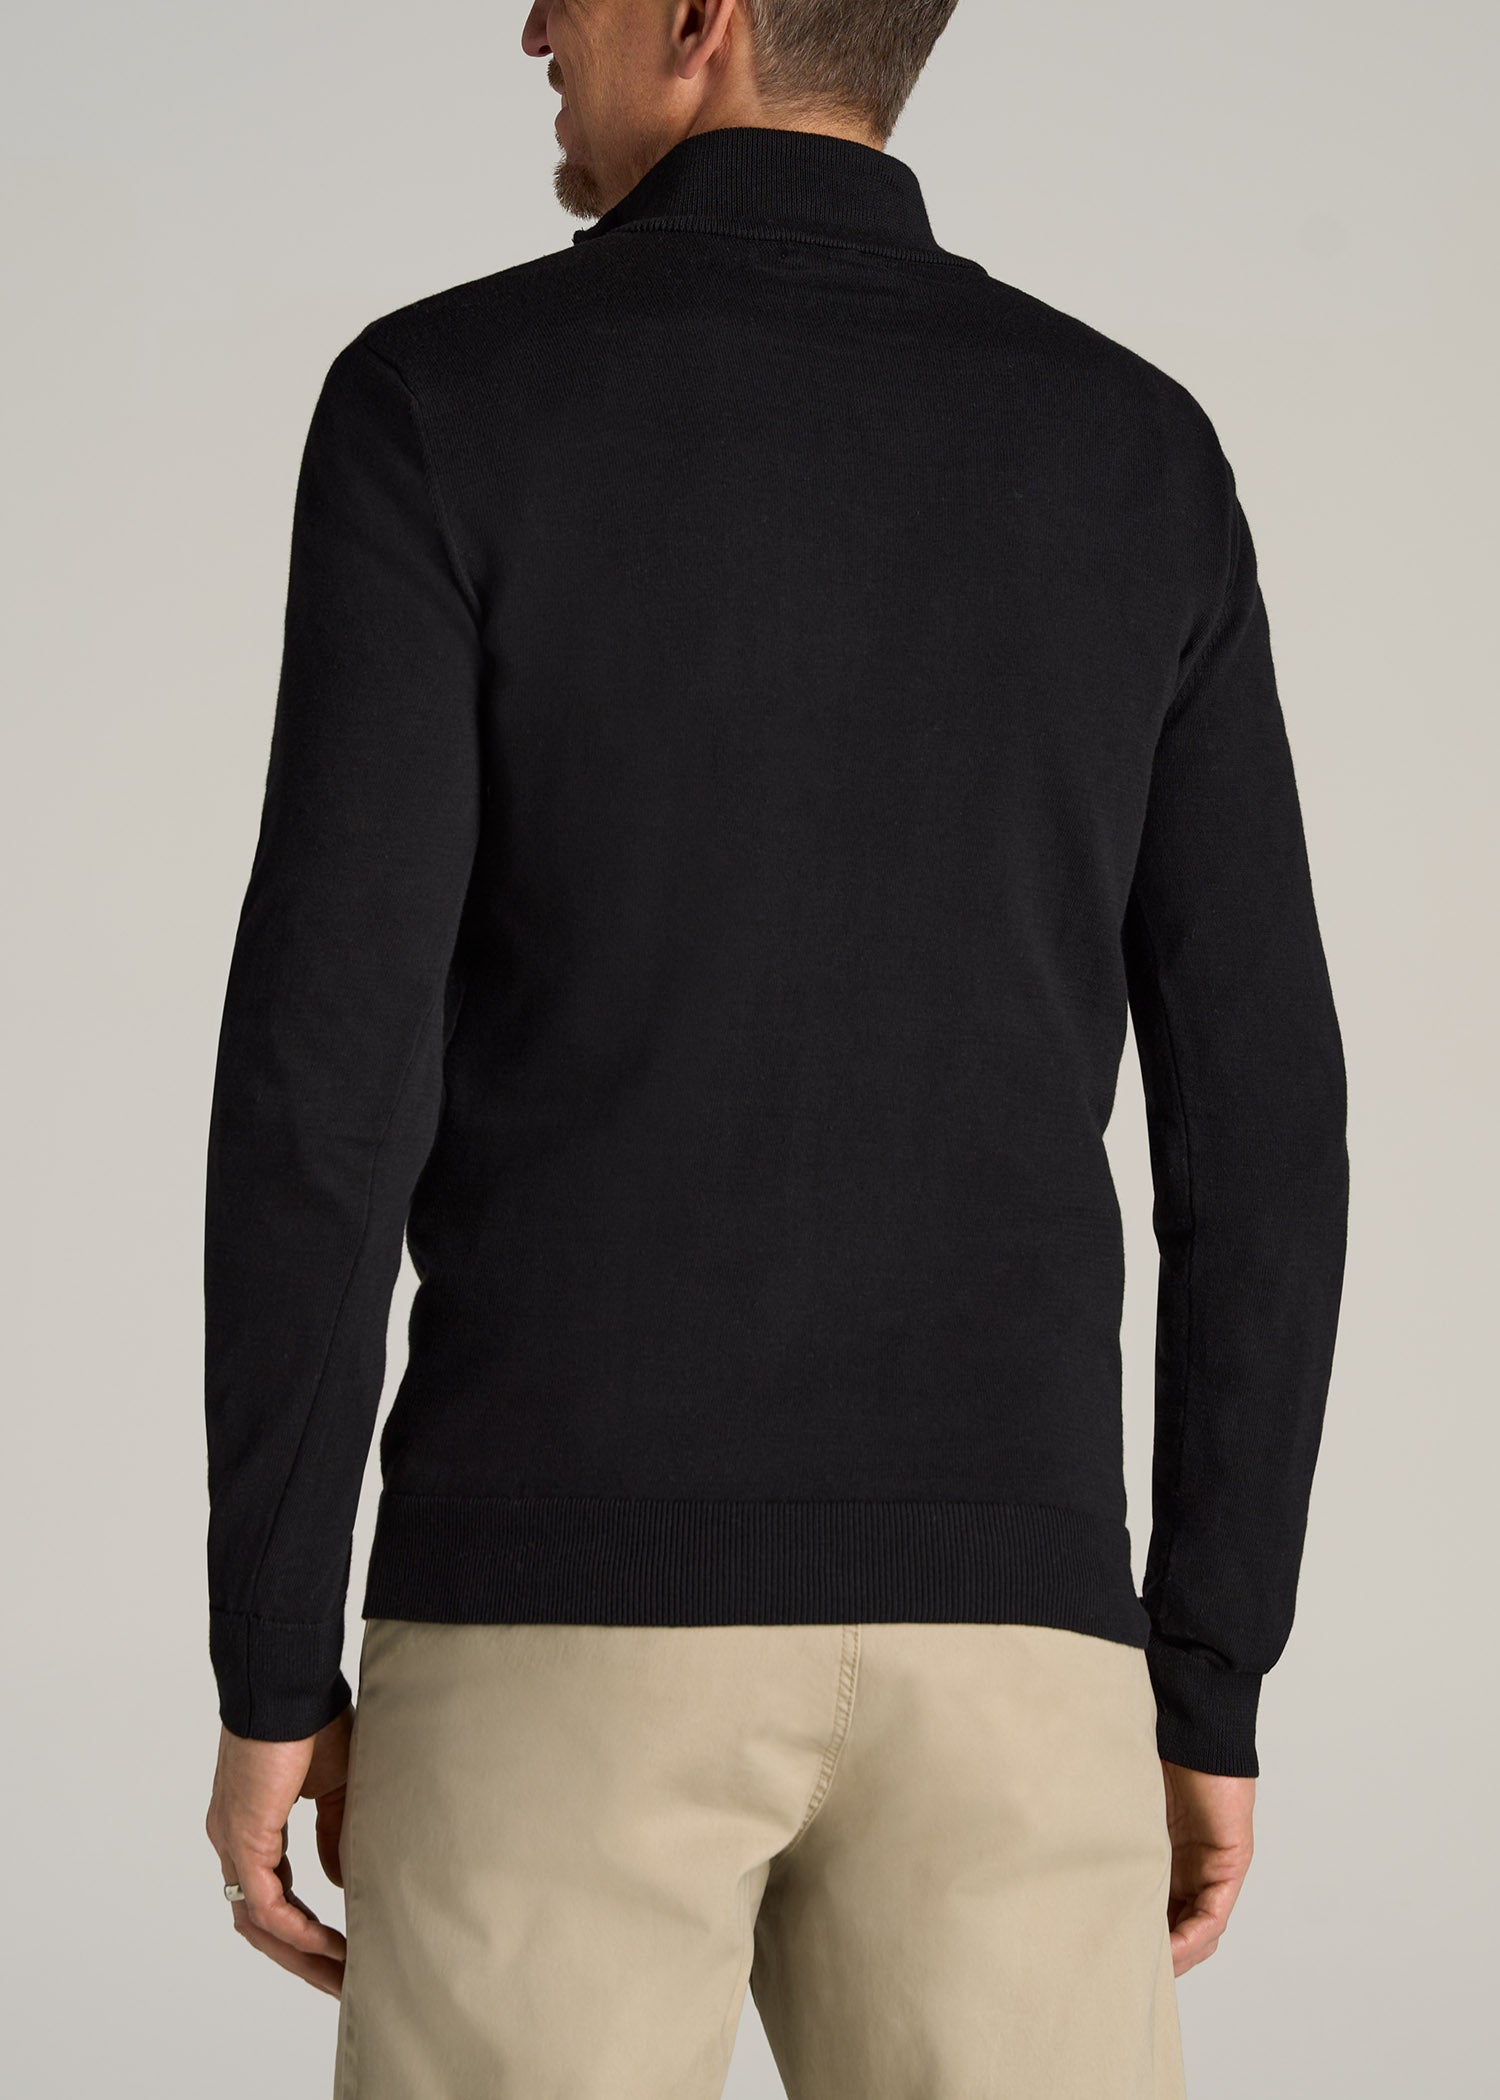    American-Tall-Men-Quarter-Zip-Sweater-Black-back